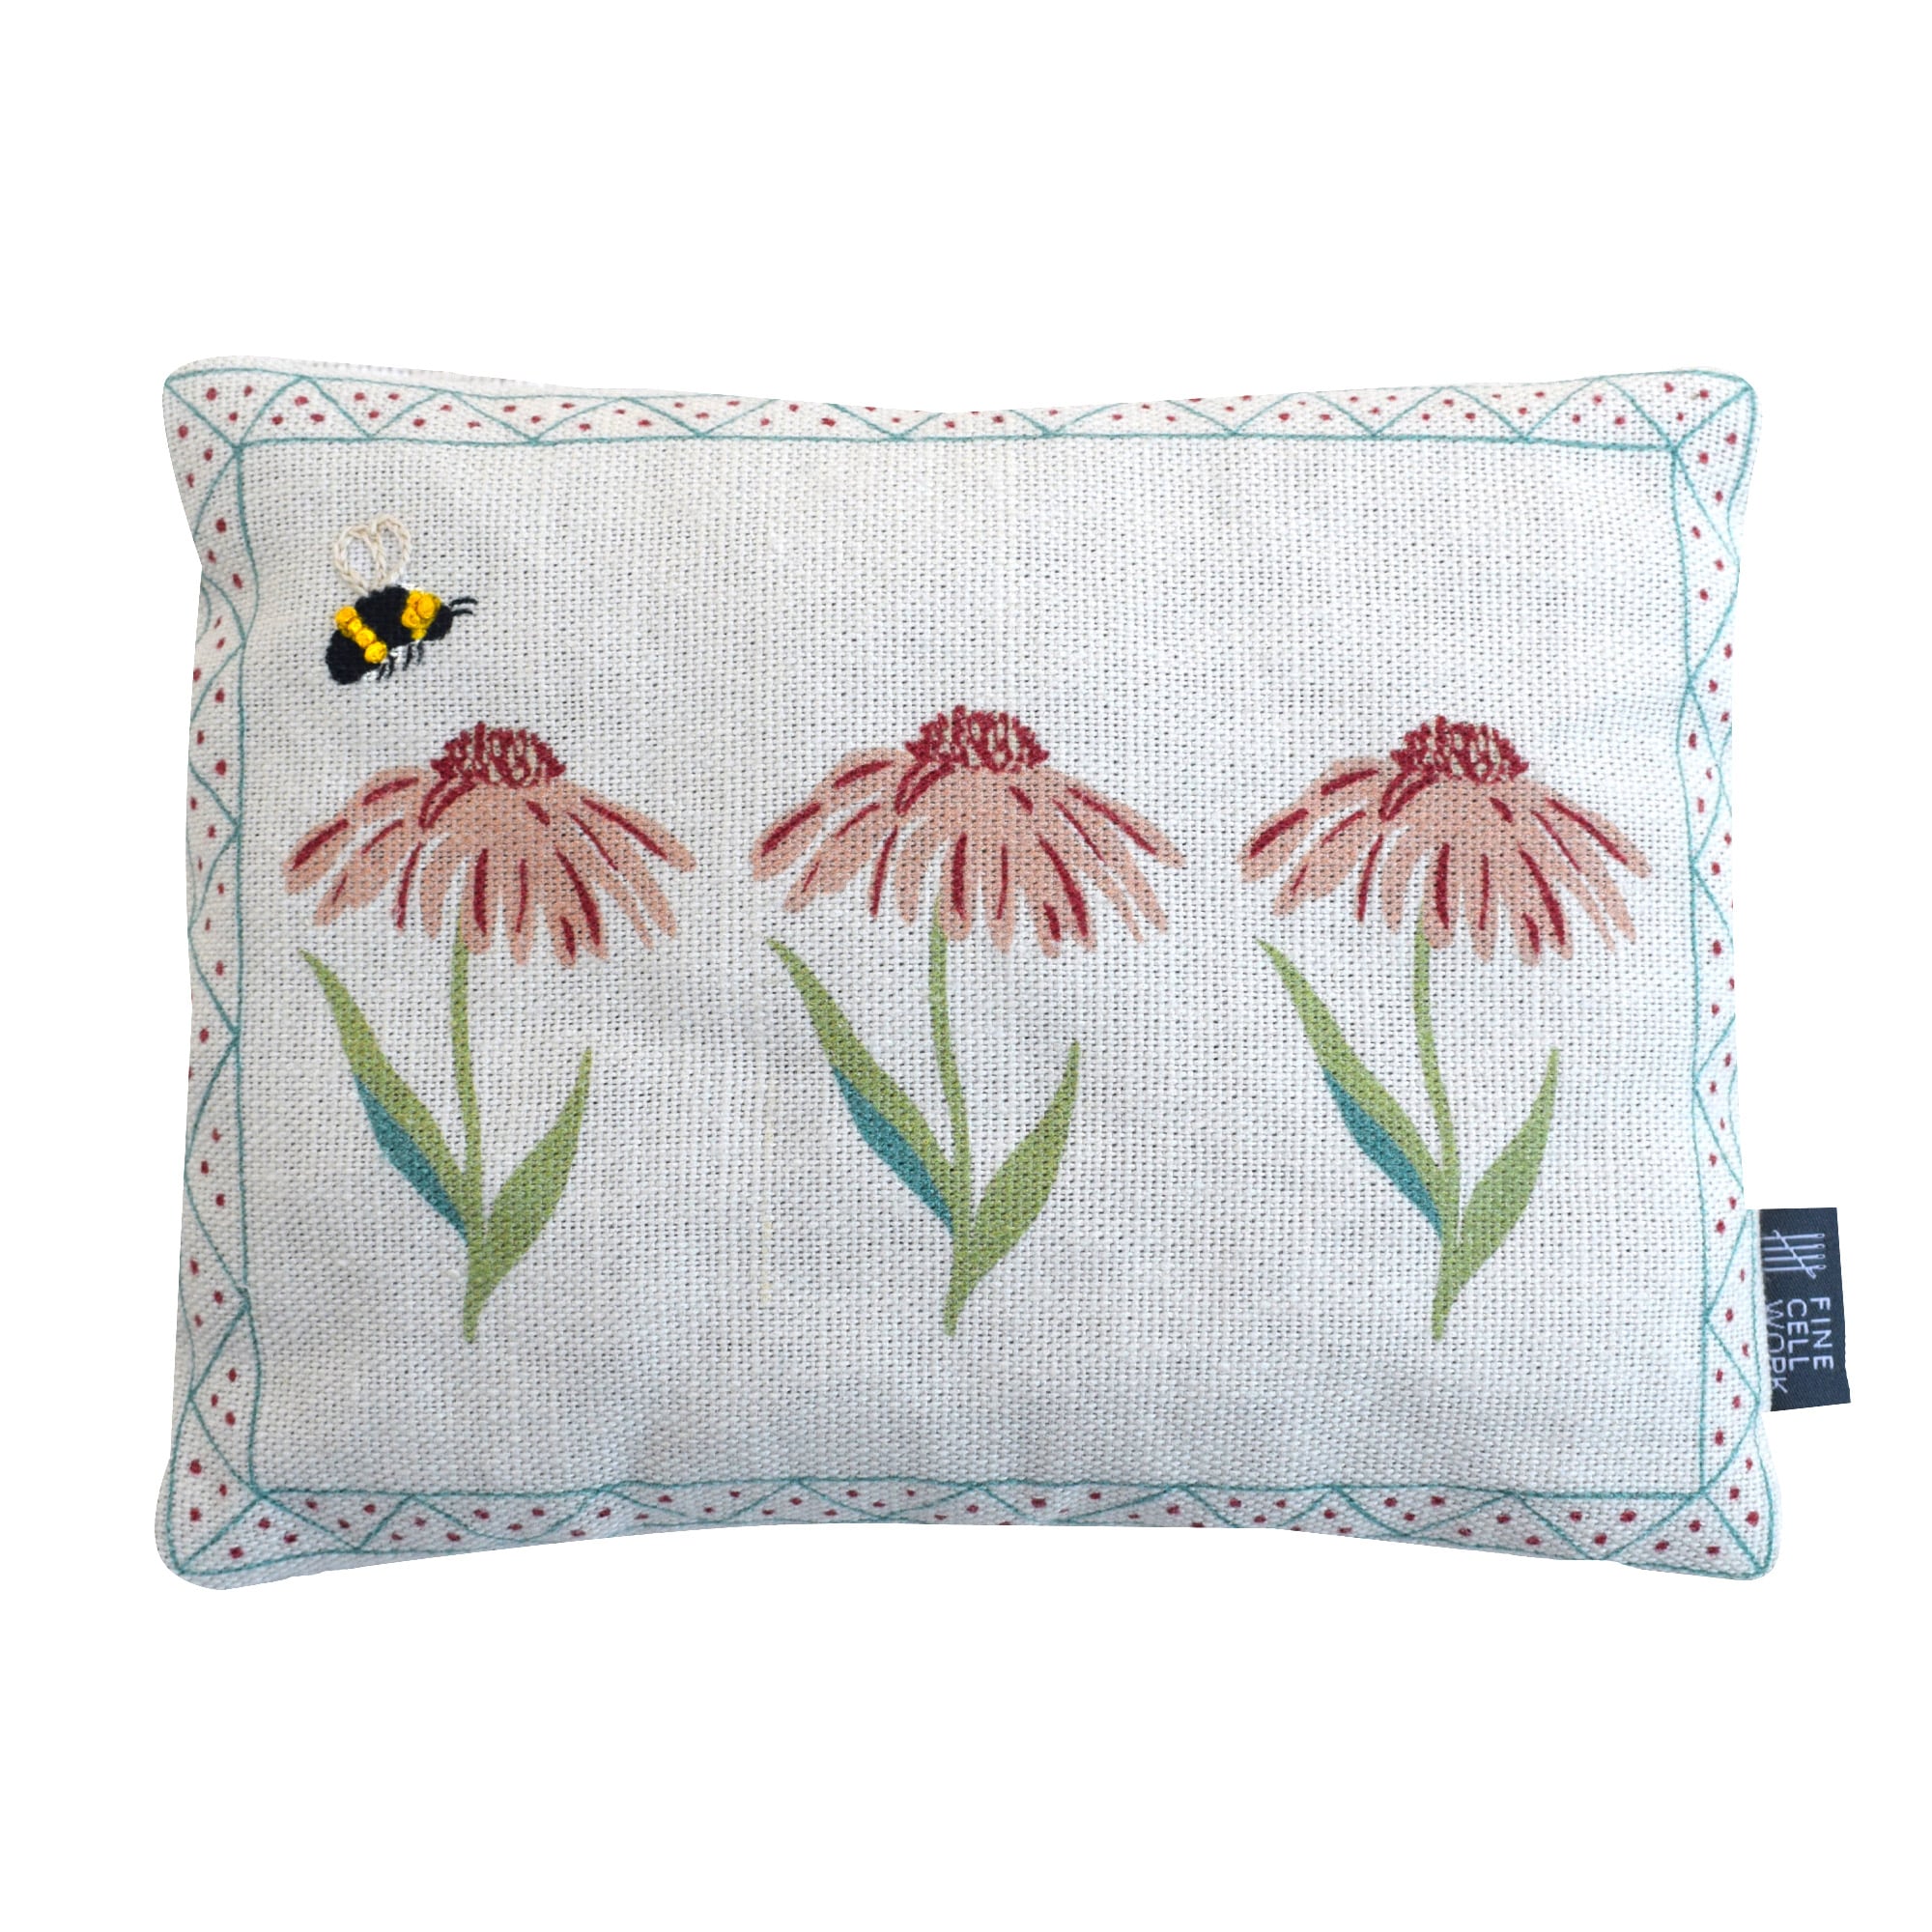 Joy-of-print-hand-Embroidered-Bee-Daisy-Lavender-Bag-min.jpg